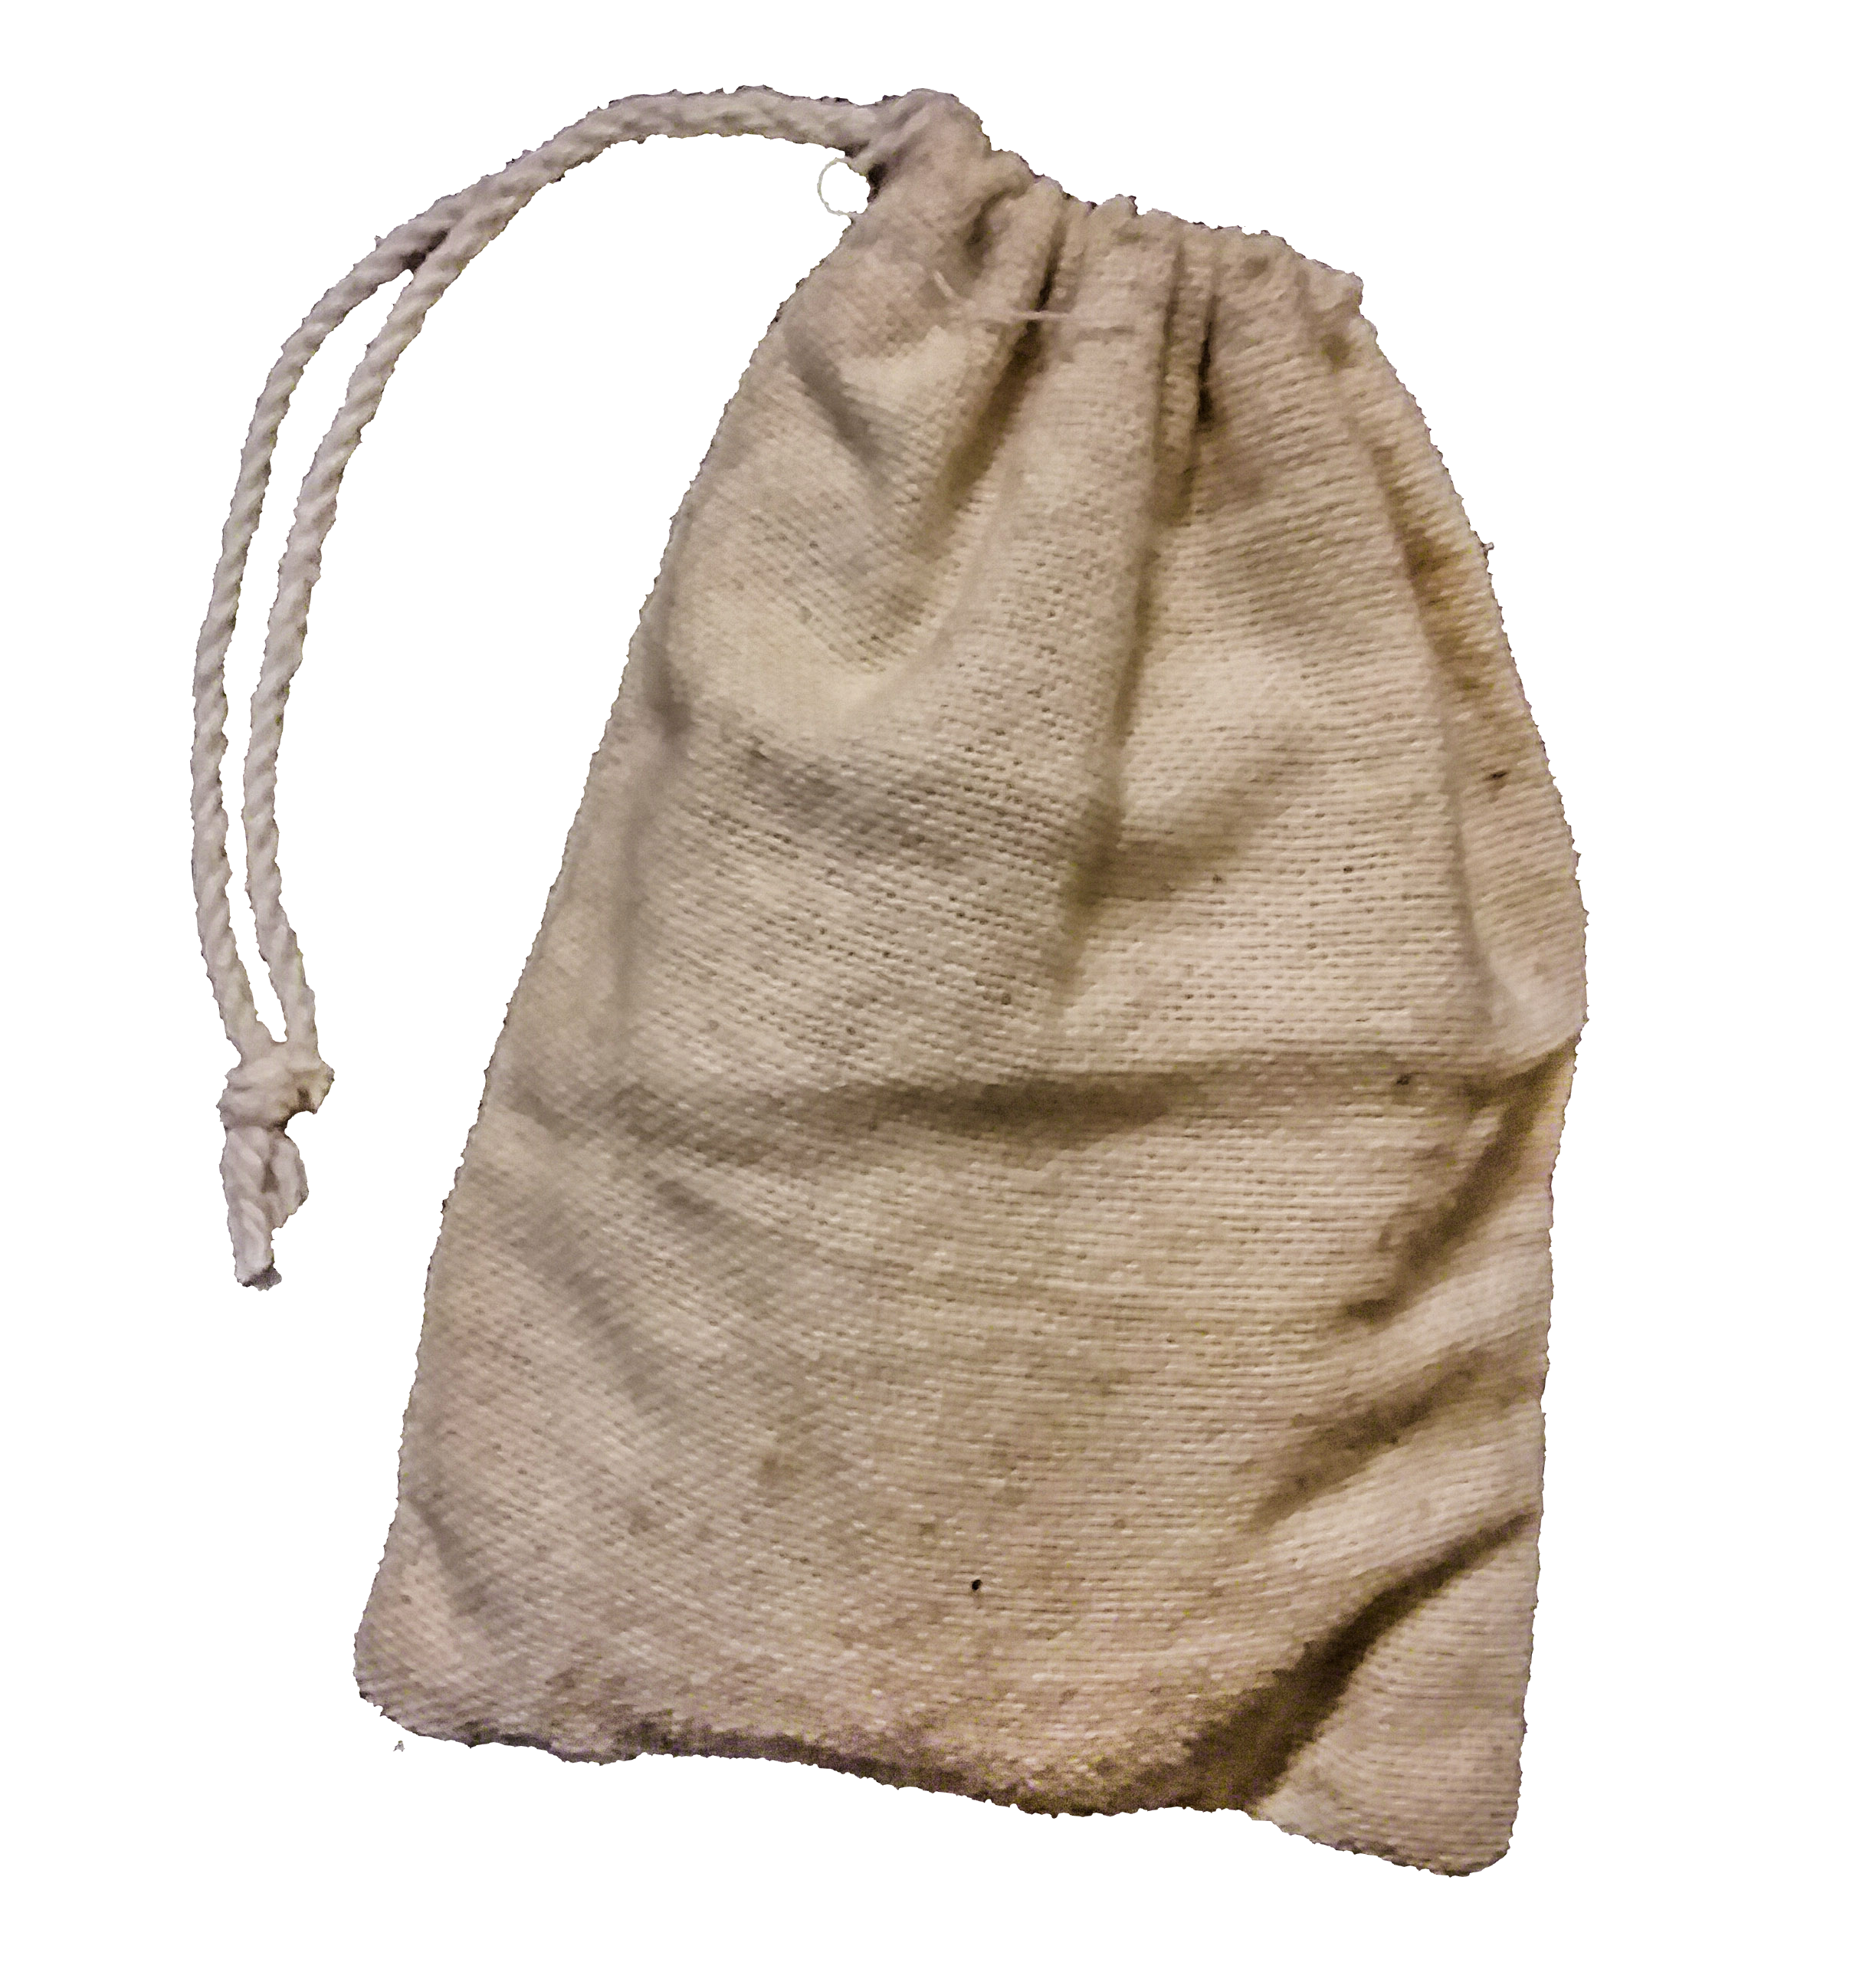 a small tan sack